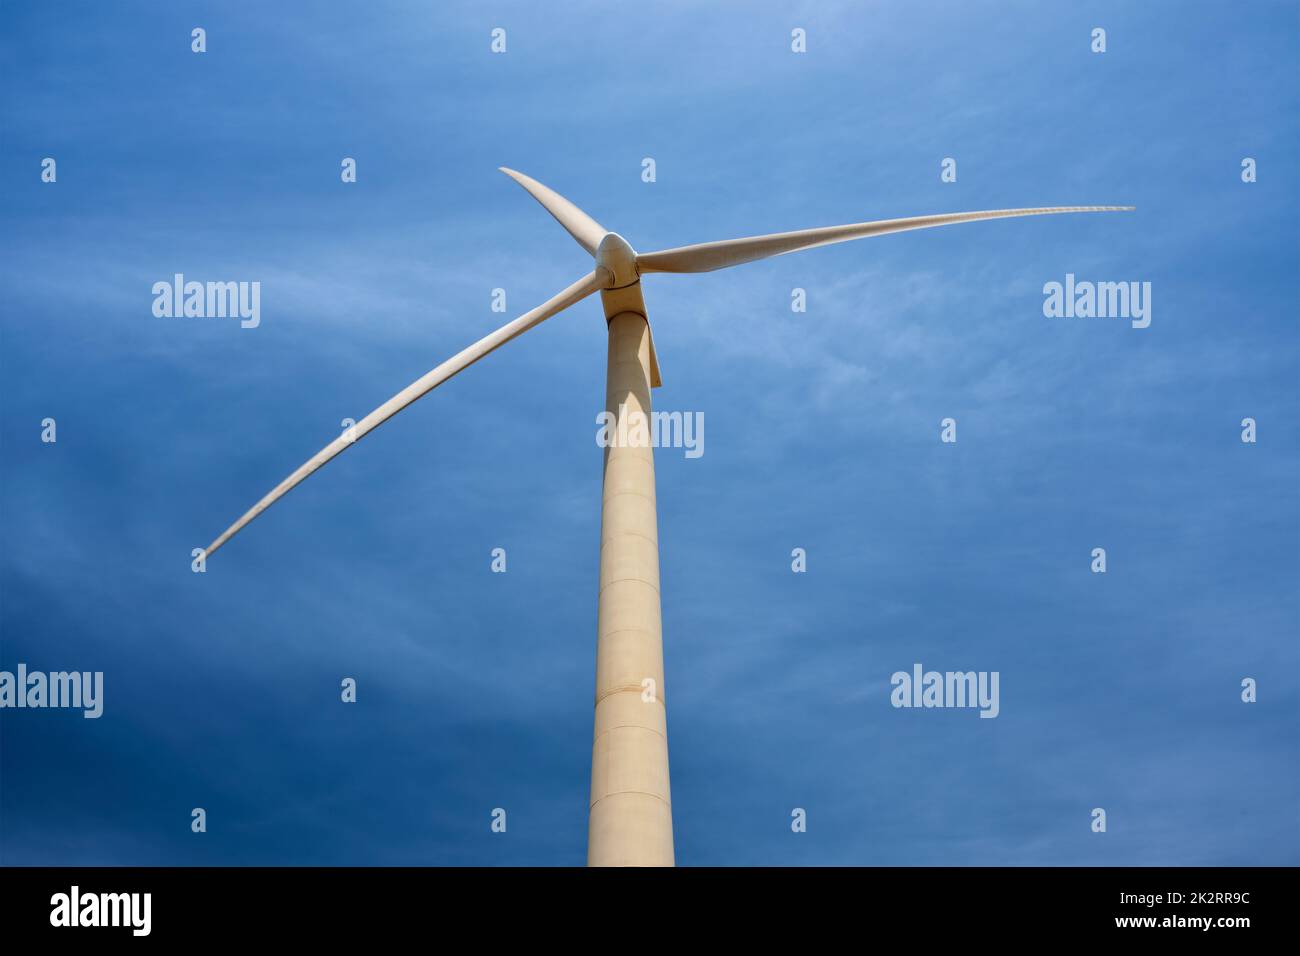 Wind generator turbine in sky Stock Photo